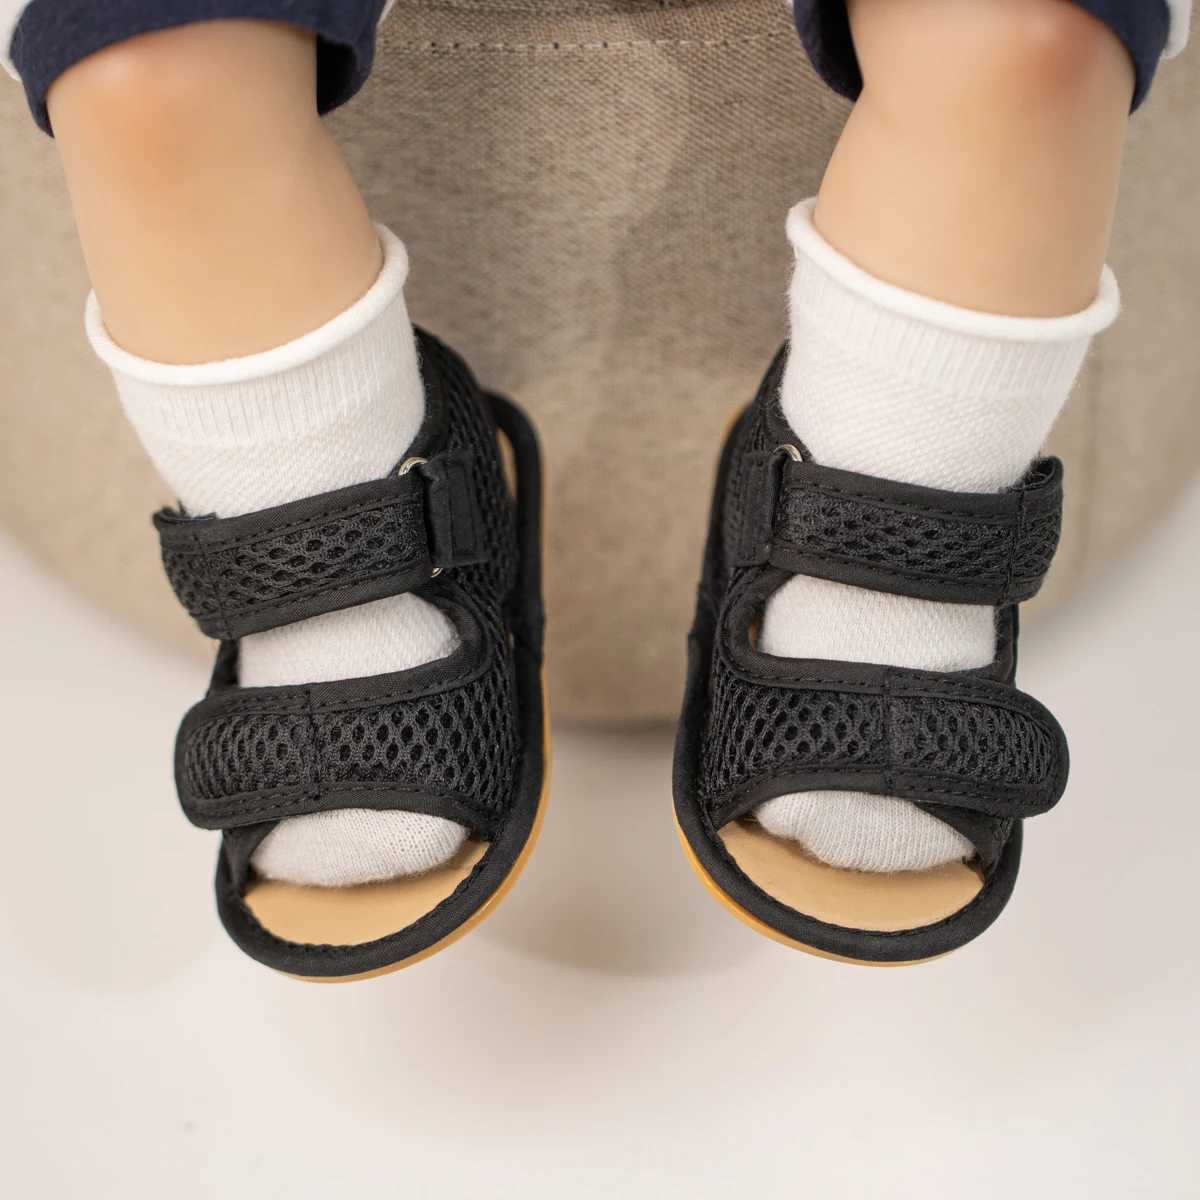 Sandals KIDSUN Baby Sandals Girls Boys Infant Shoes Summer Soft-sole Anti-Slip Rubber Garden Toddler First Walkers Shoes 0-18 Months 240329